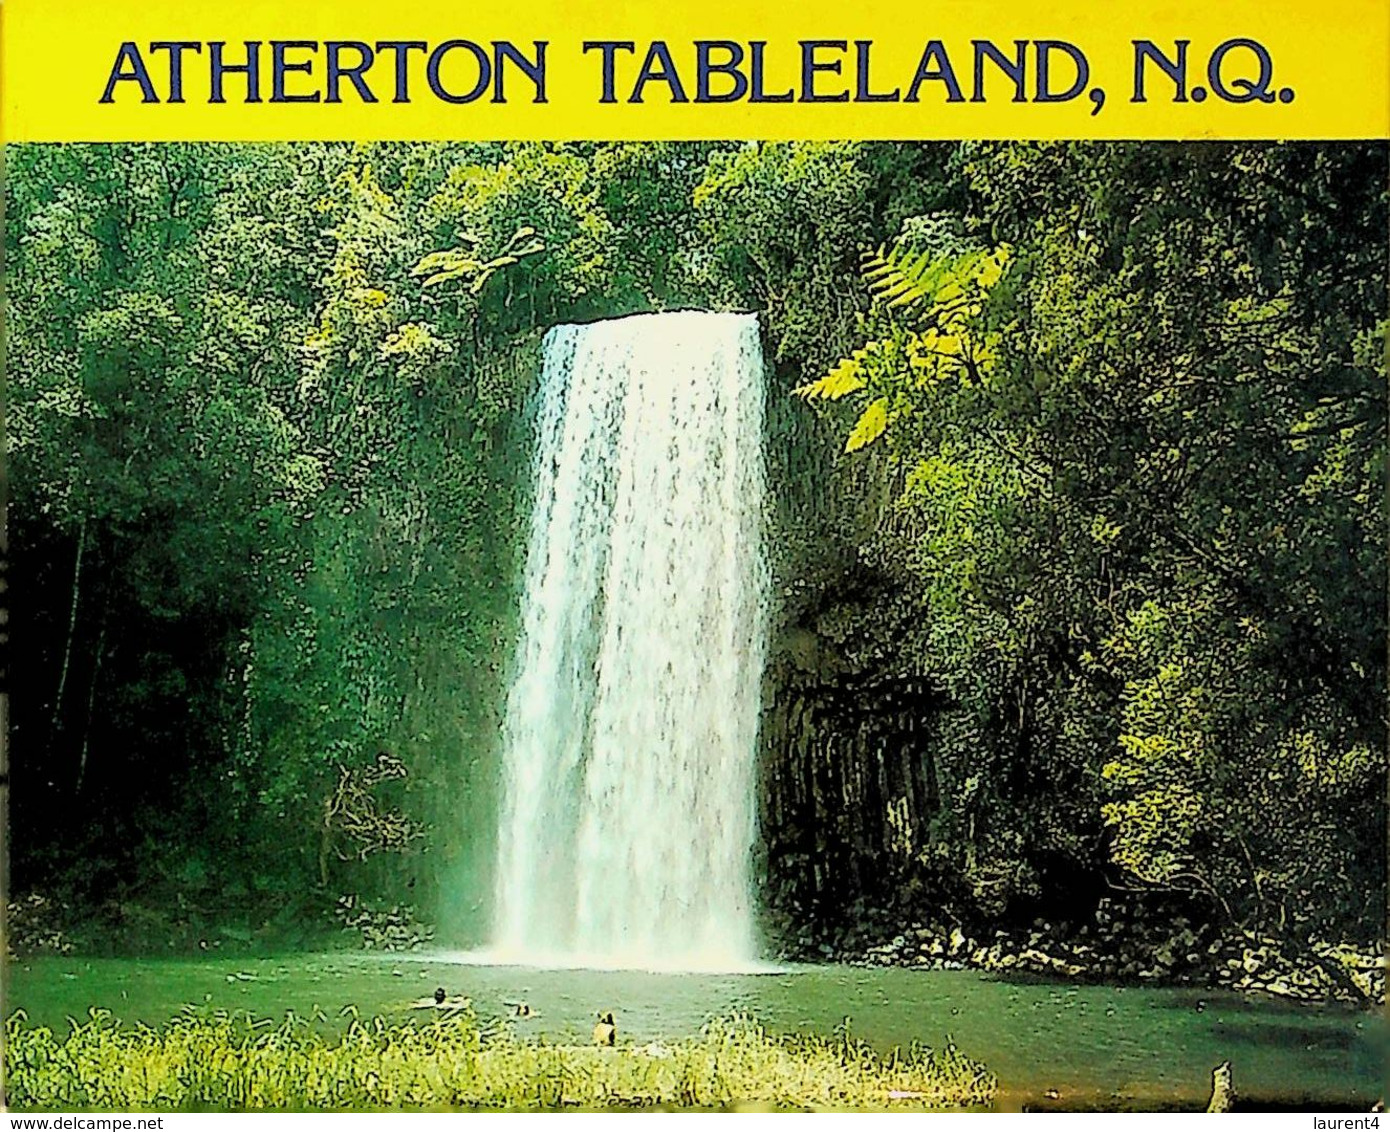 (Booklet 108) Australia - QLD Atherton Tableland - Atherton Tablelands